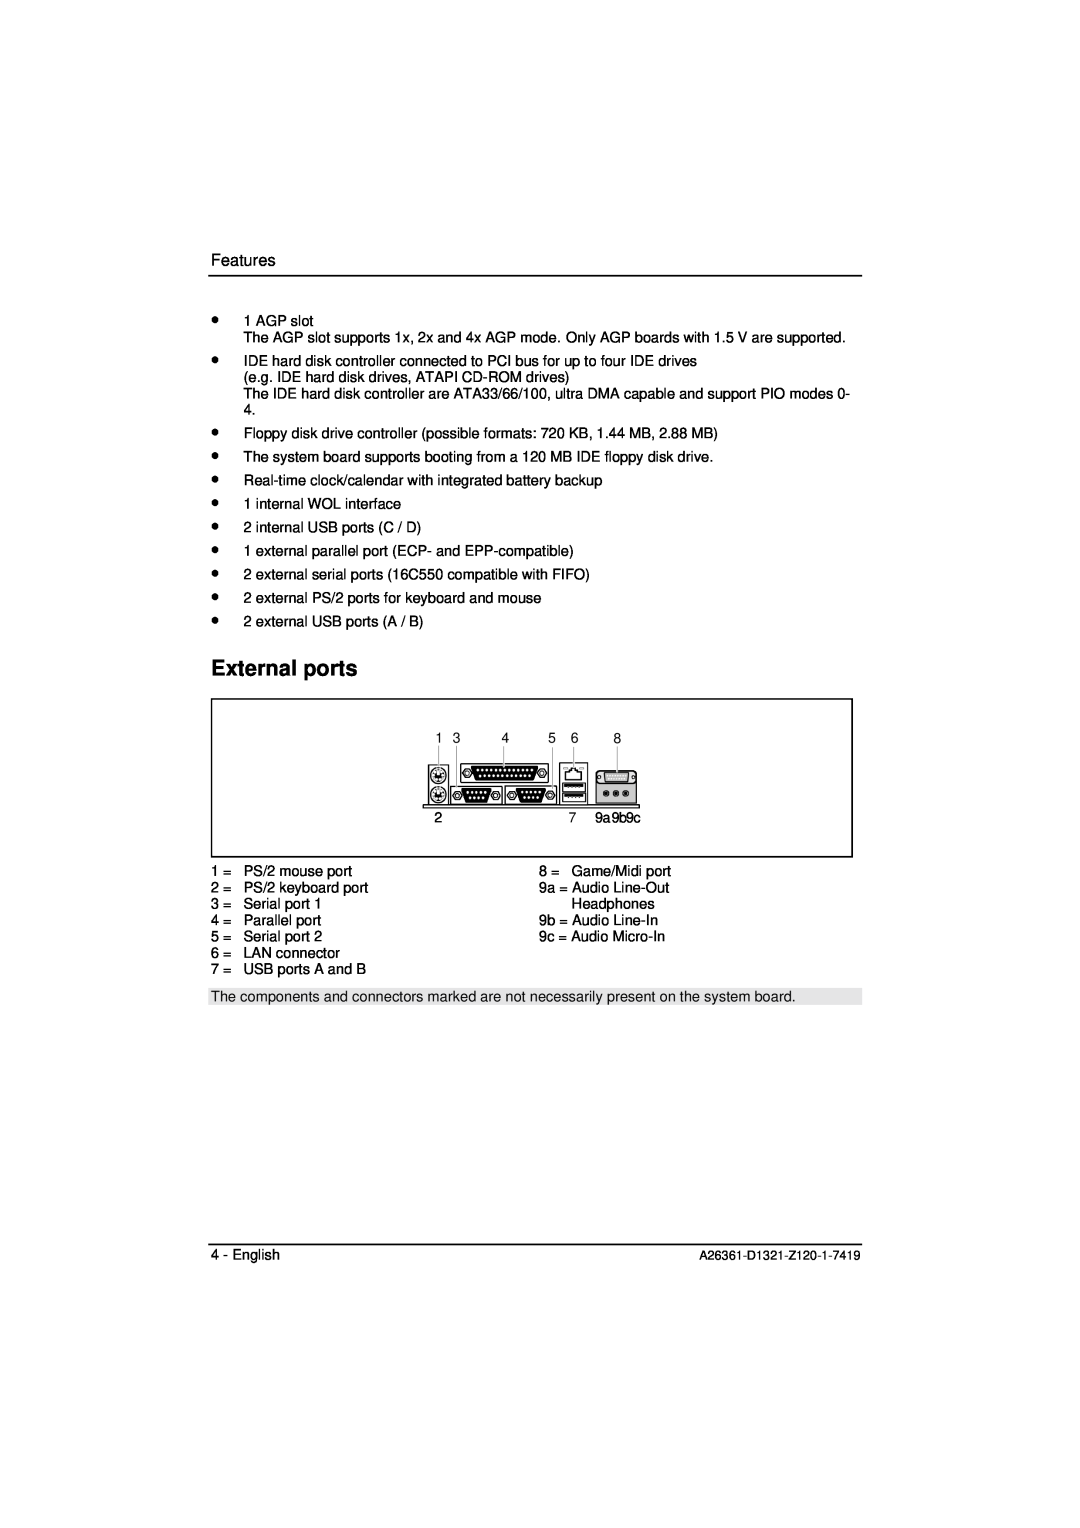 Fujitsu D1321 technical manual External ports, Features 